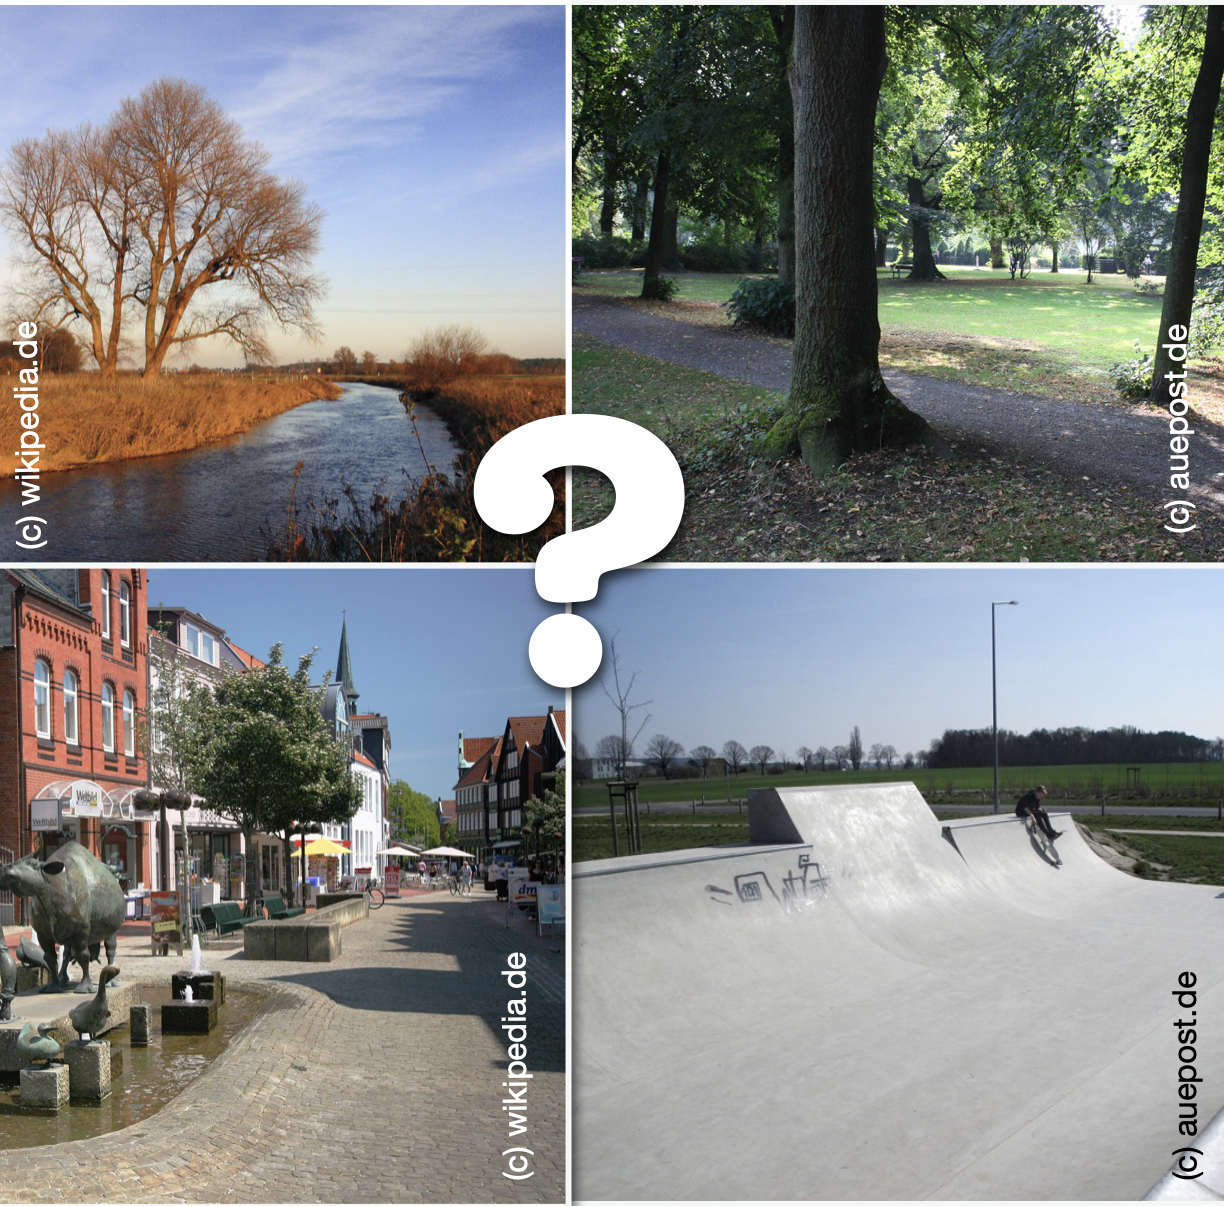 We want YOU: Was ist Dein Lieblingsort in Wunstorf? (Filmprojekt der Stadt)